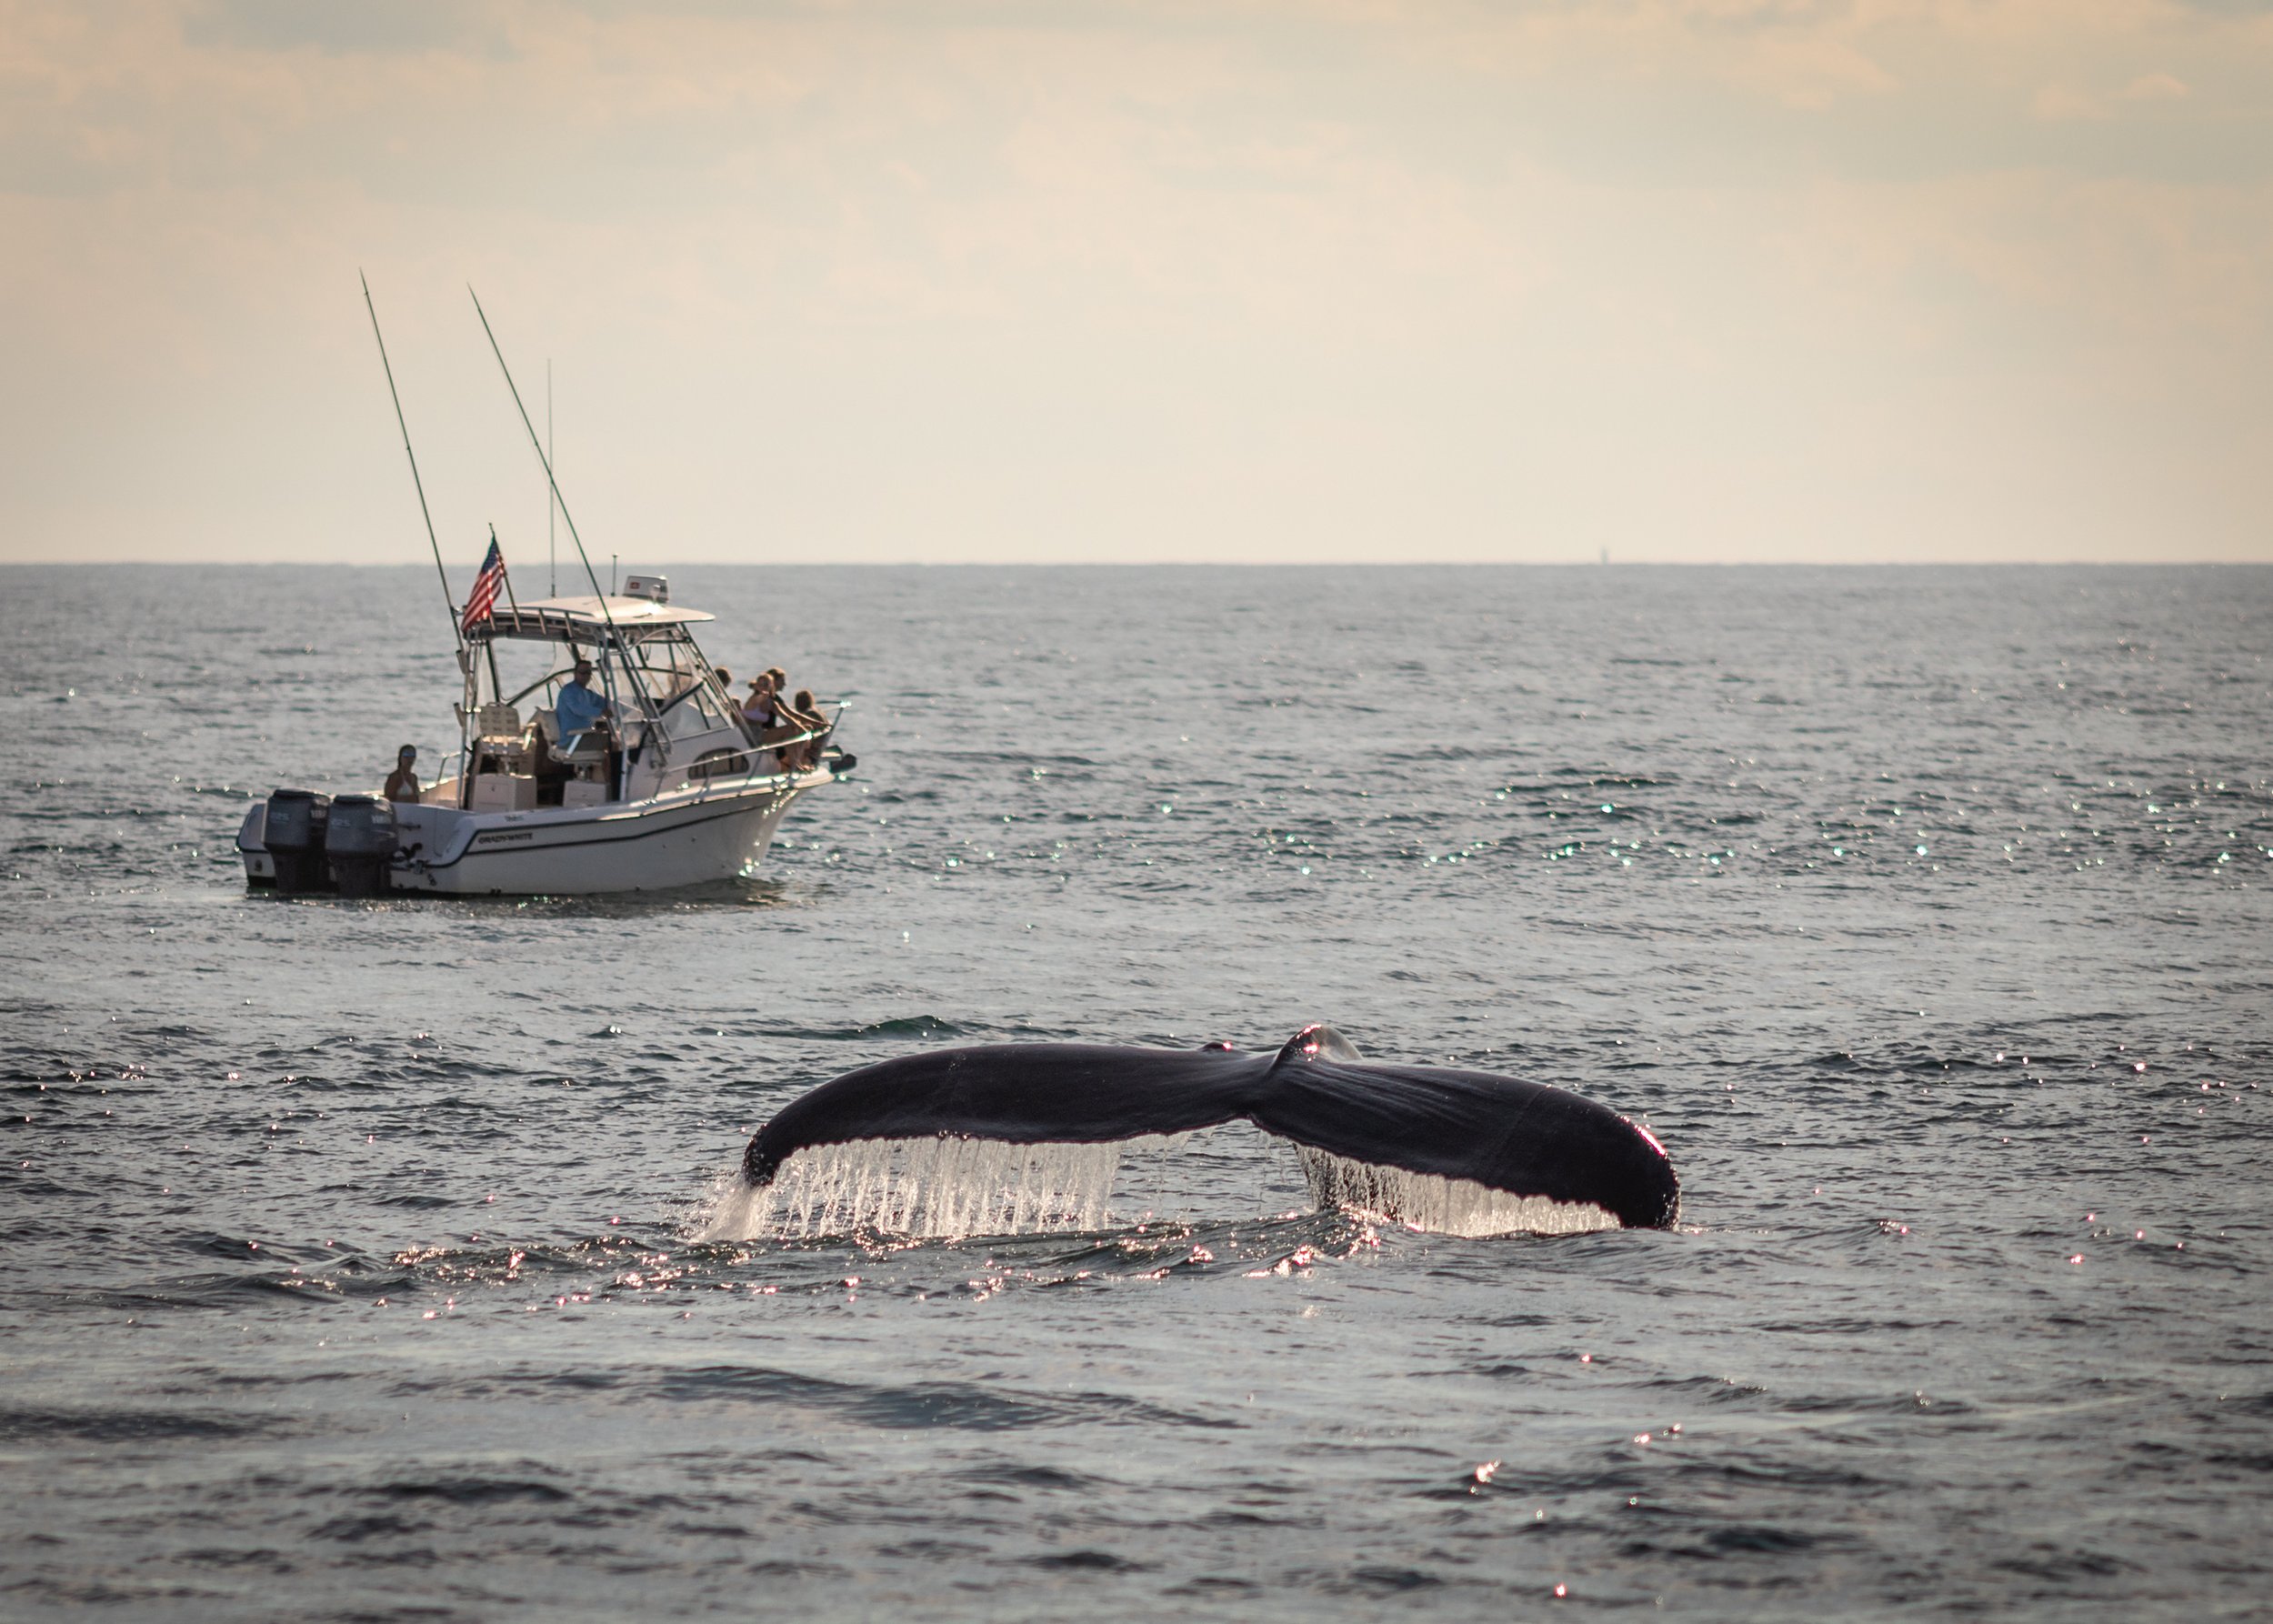 Pleasure boat and humpback whale, Cape Cod Bay